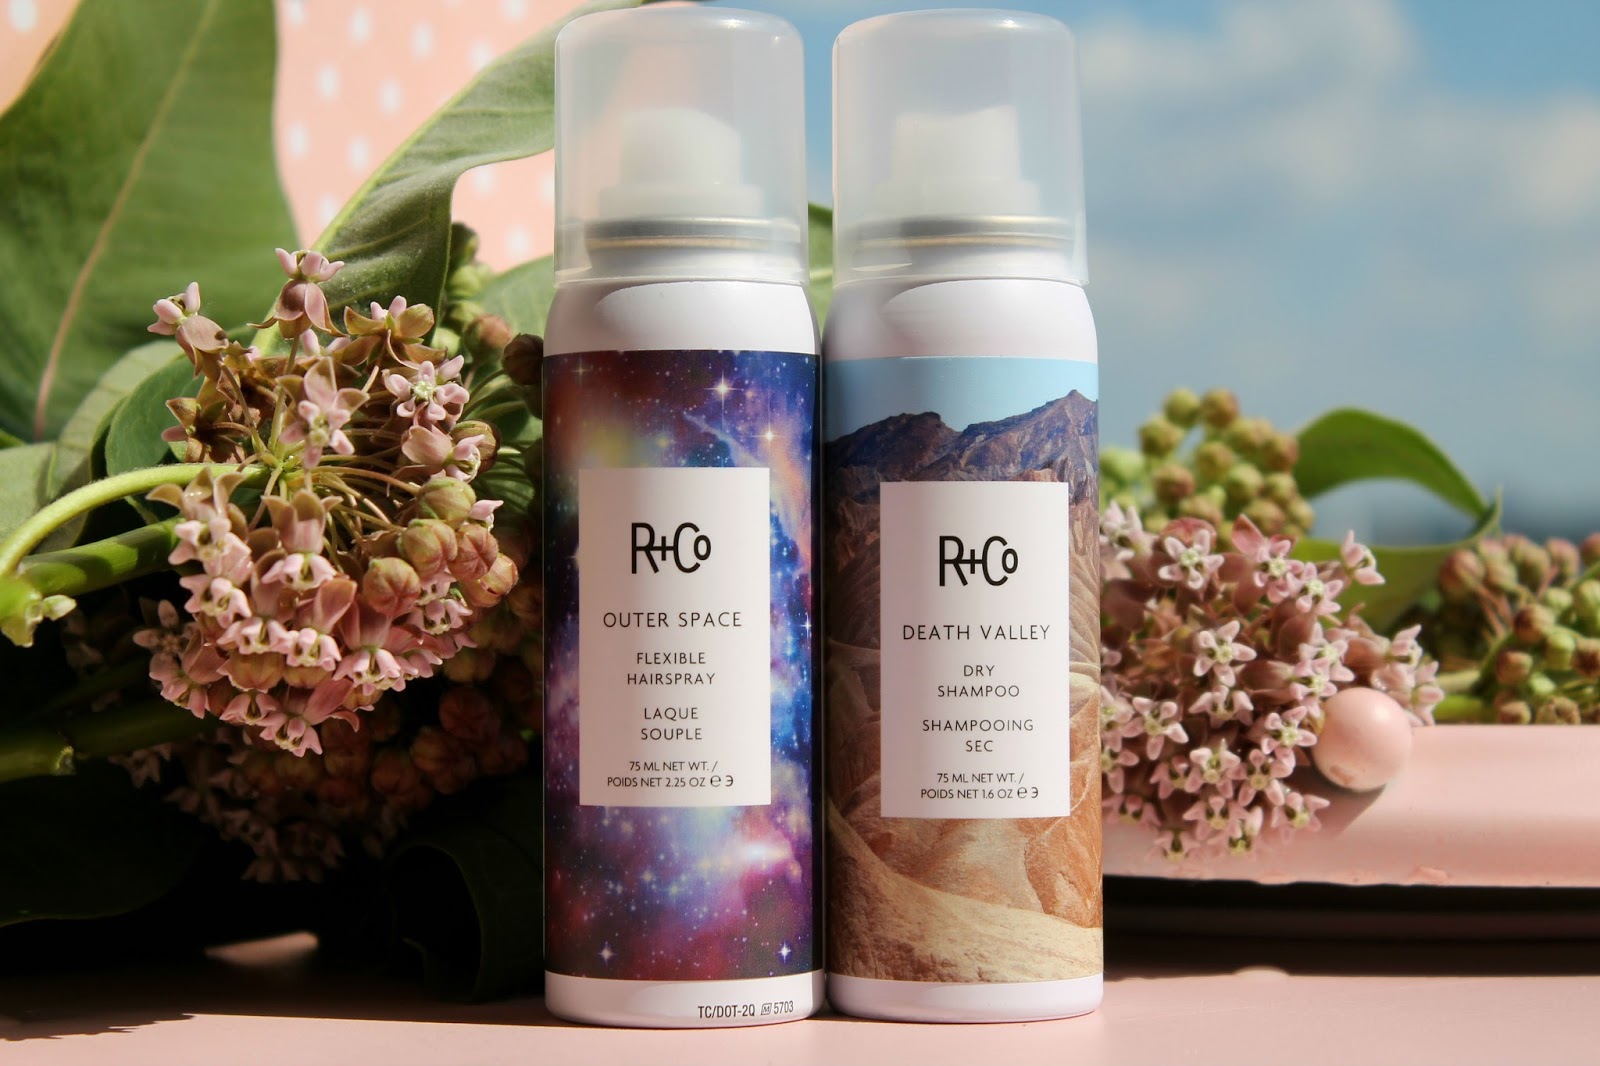 Сухой шампунь r co. R+co Rockaway Salt Spray. R+co Death Valley Dry Shampoo. Спрей для волос r+co Outer Space.